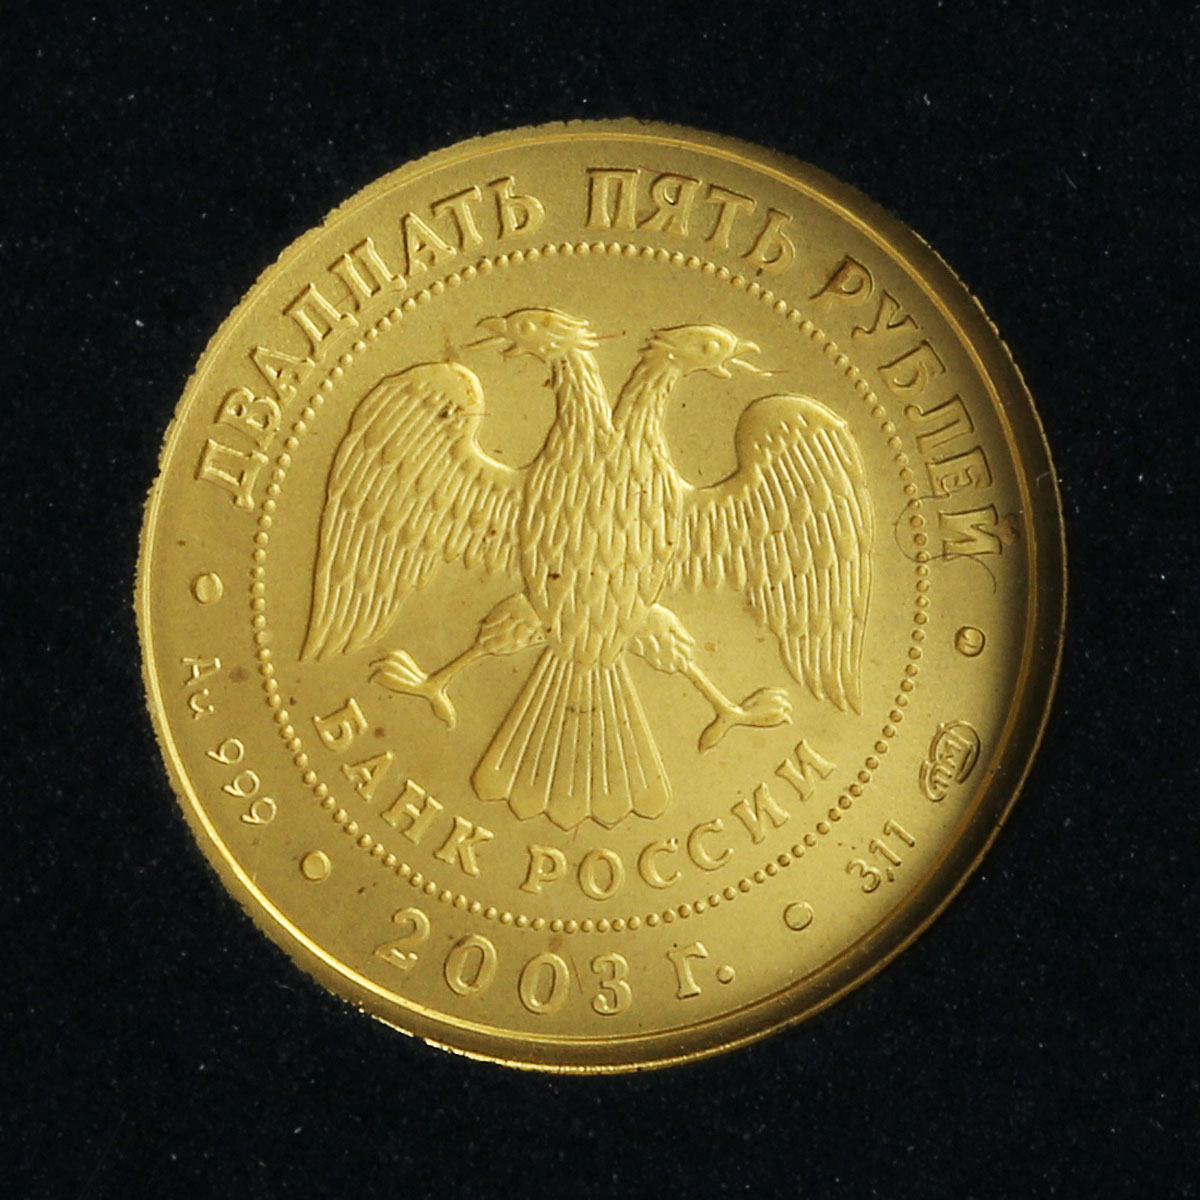 Russia 25 rubles Zodiac Aries gold 2003